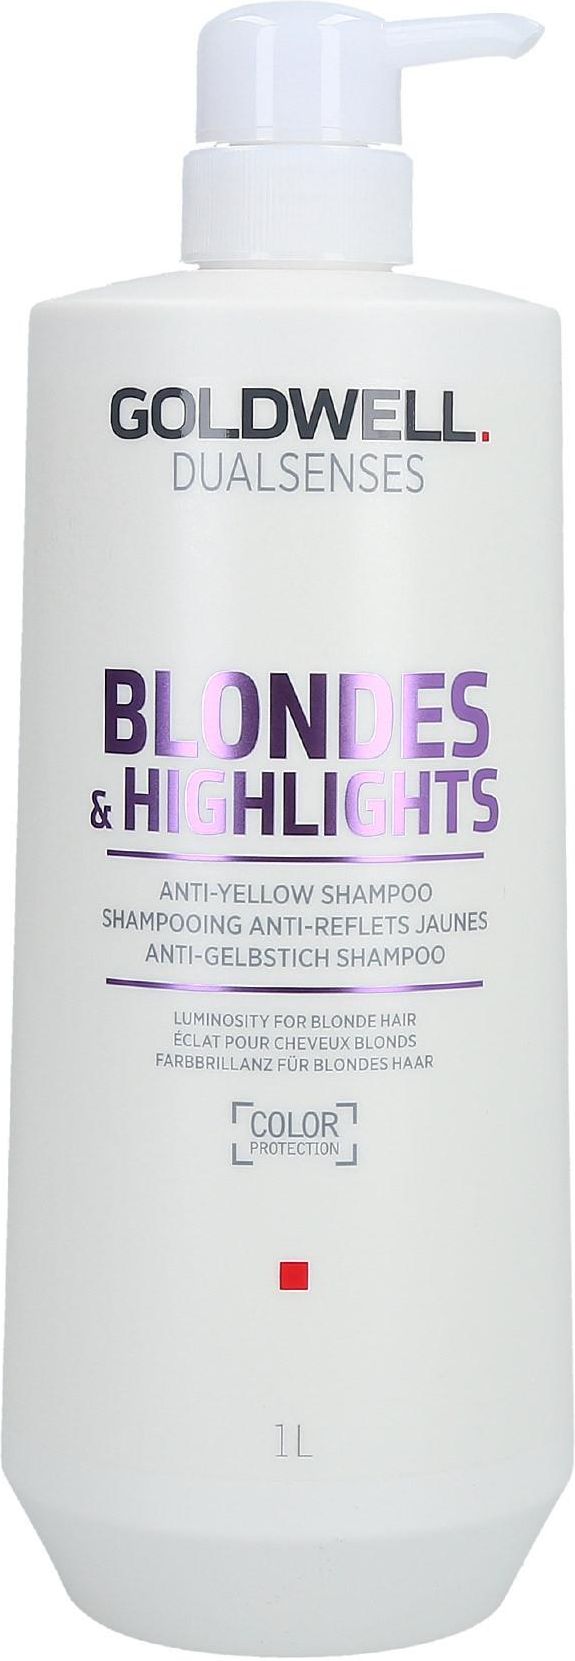 szampon goldwell dualsenses blondes &